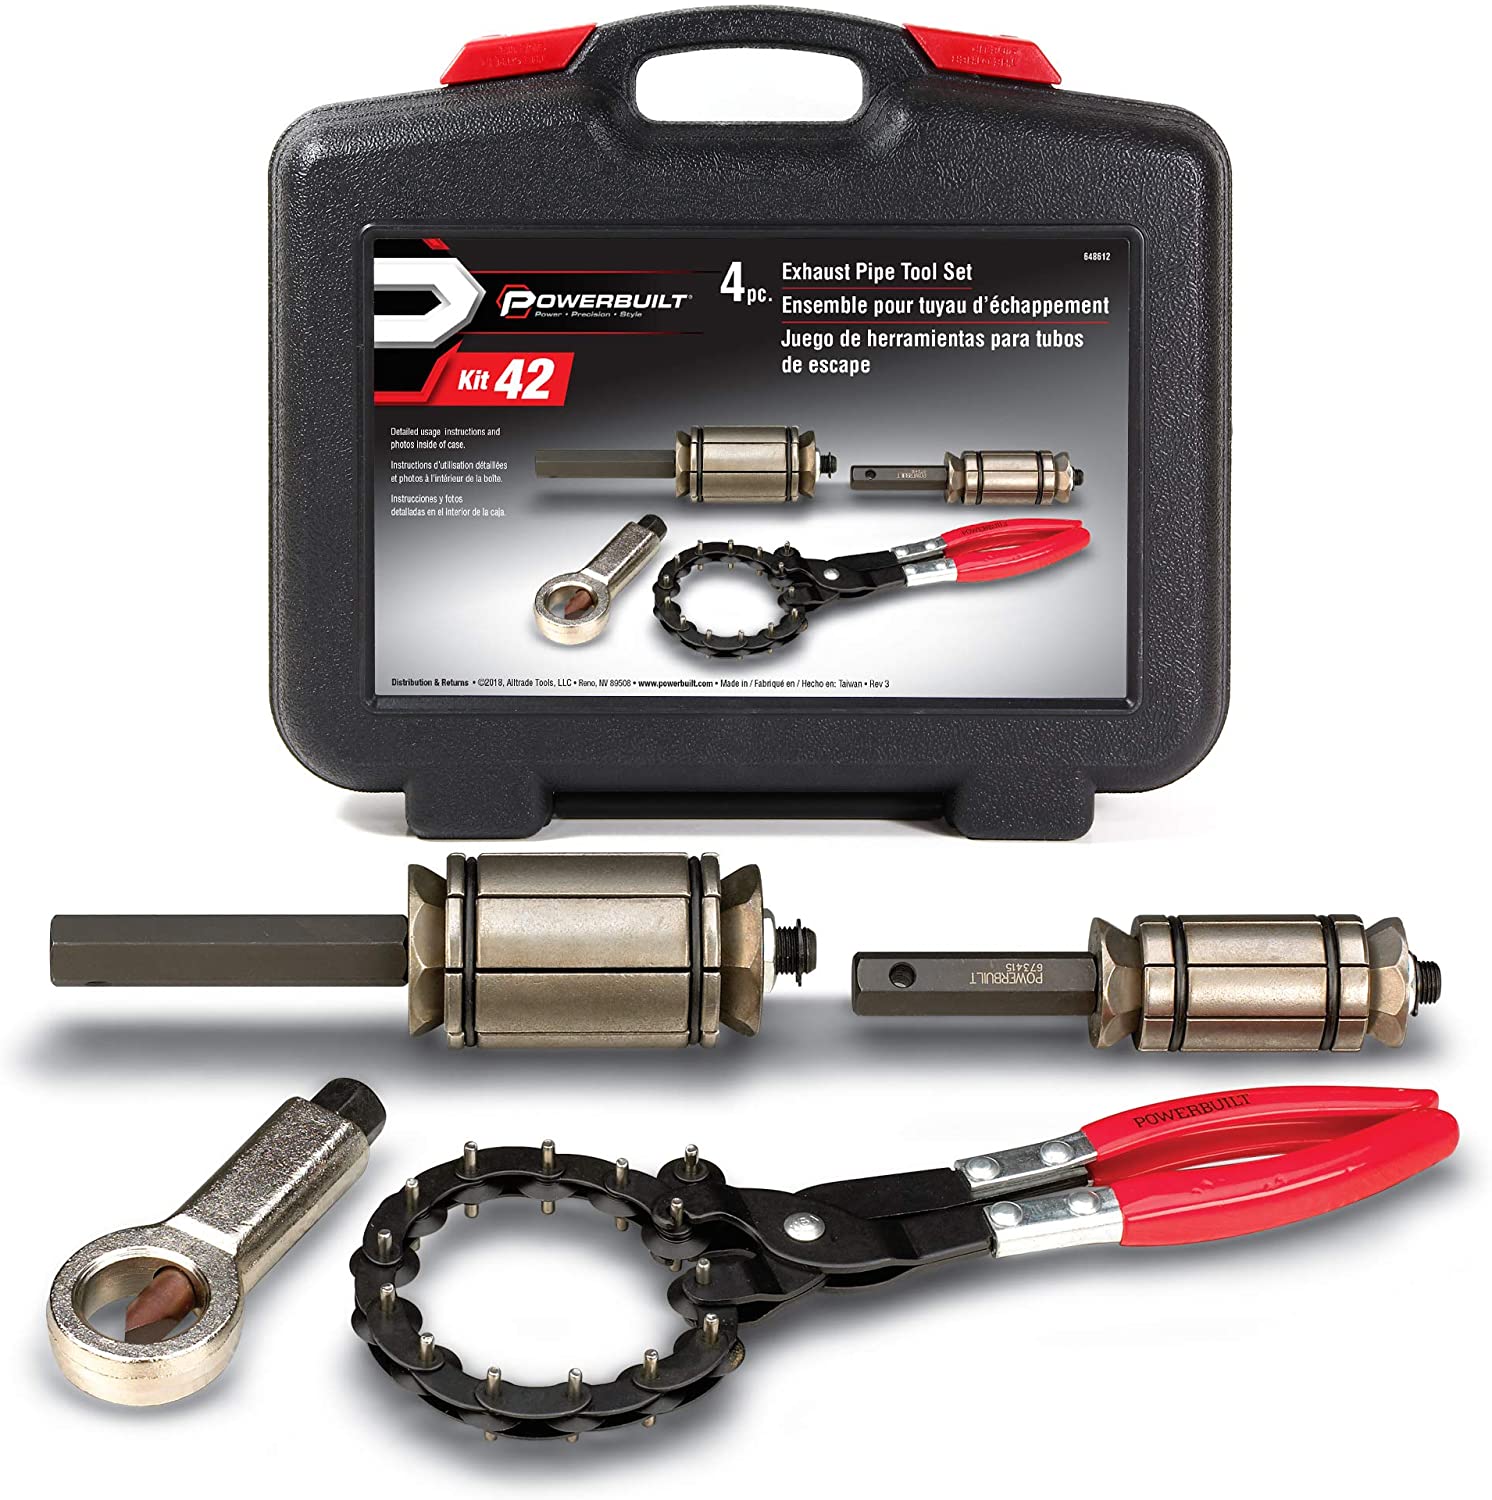 Powerbuilt 648612 Kit 42 4pc. Exhaust Tool Set $44 + free s/h at Amazon